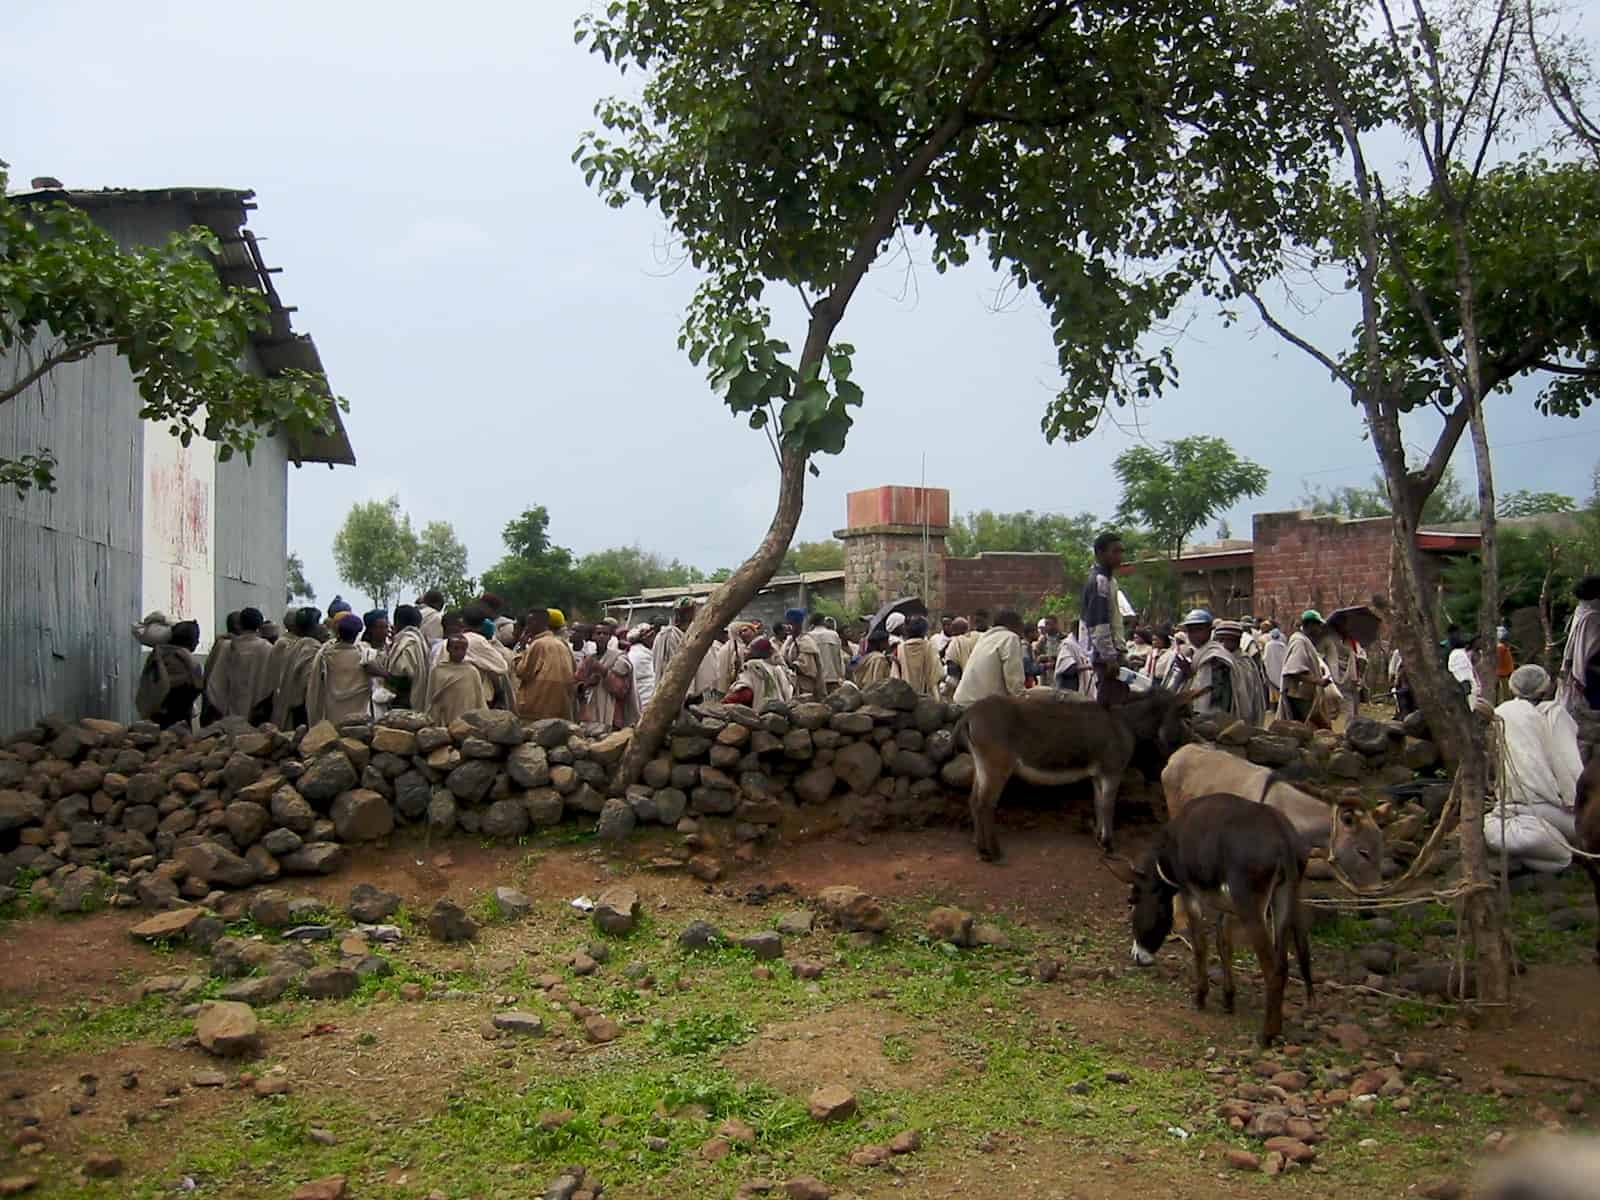 https://commons.wikimedia.org/wiki/File:Food_Aid_Rwanda.jpeg